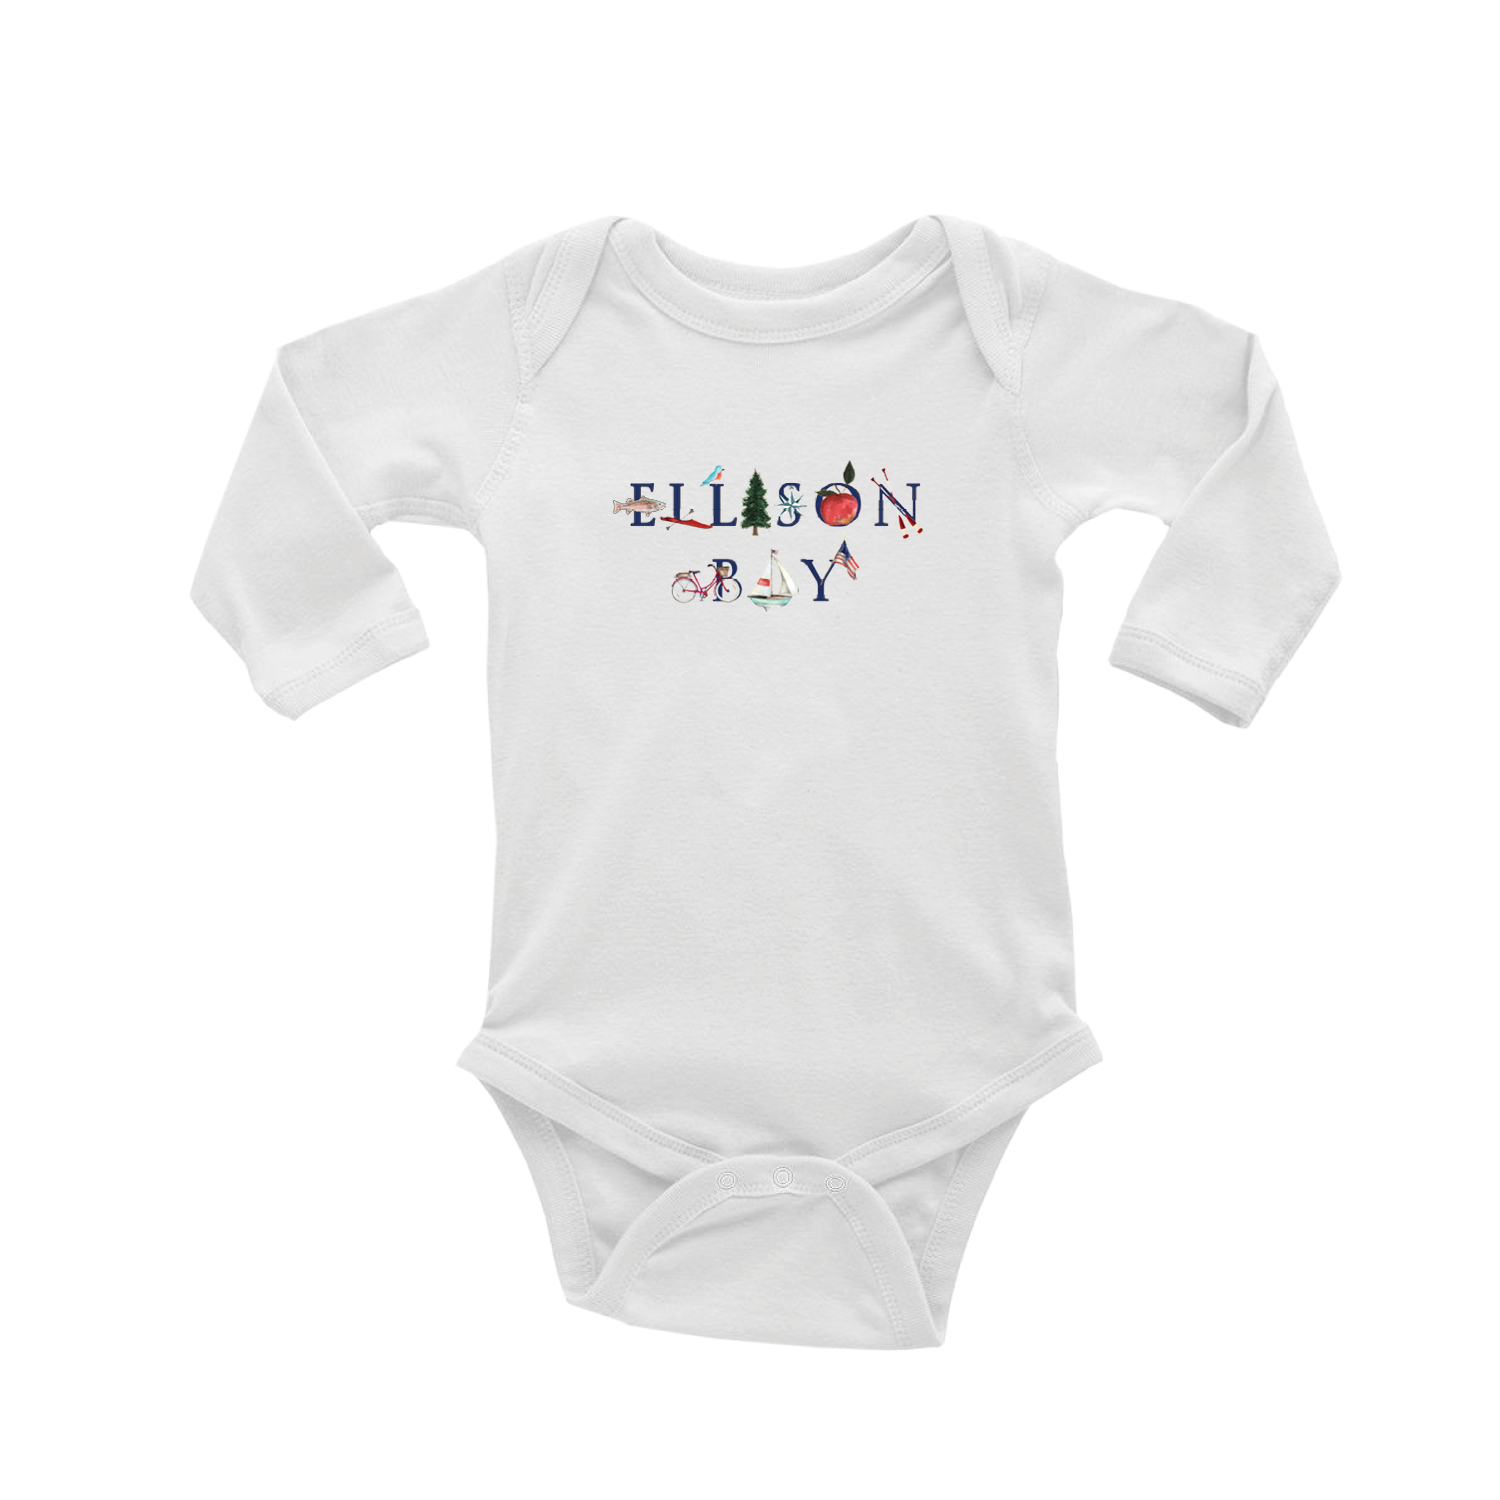 Ellison Bay baby snap up long sleeve